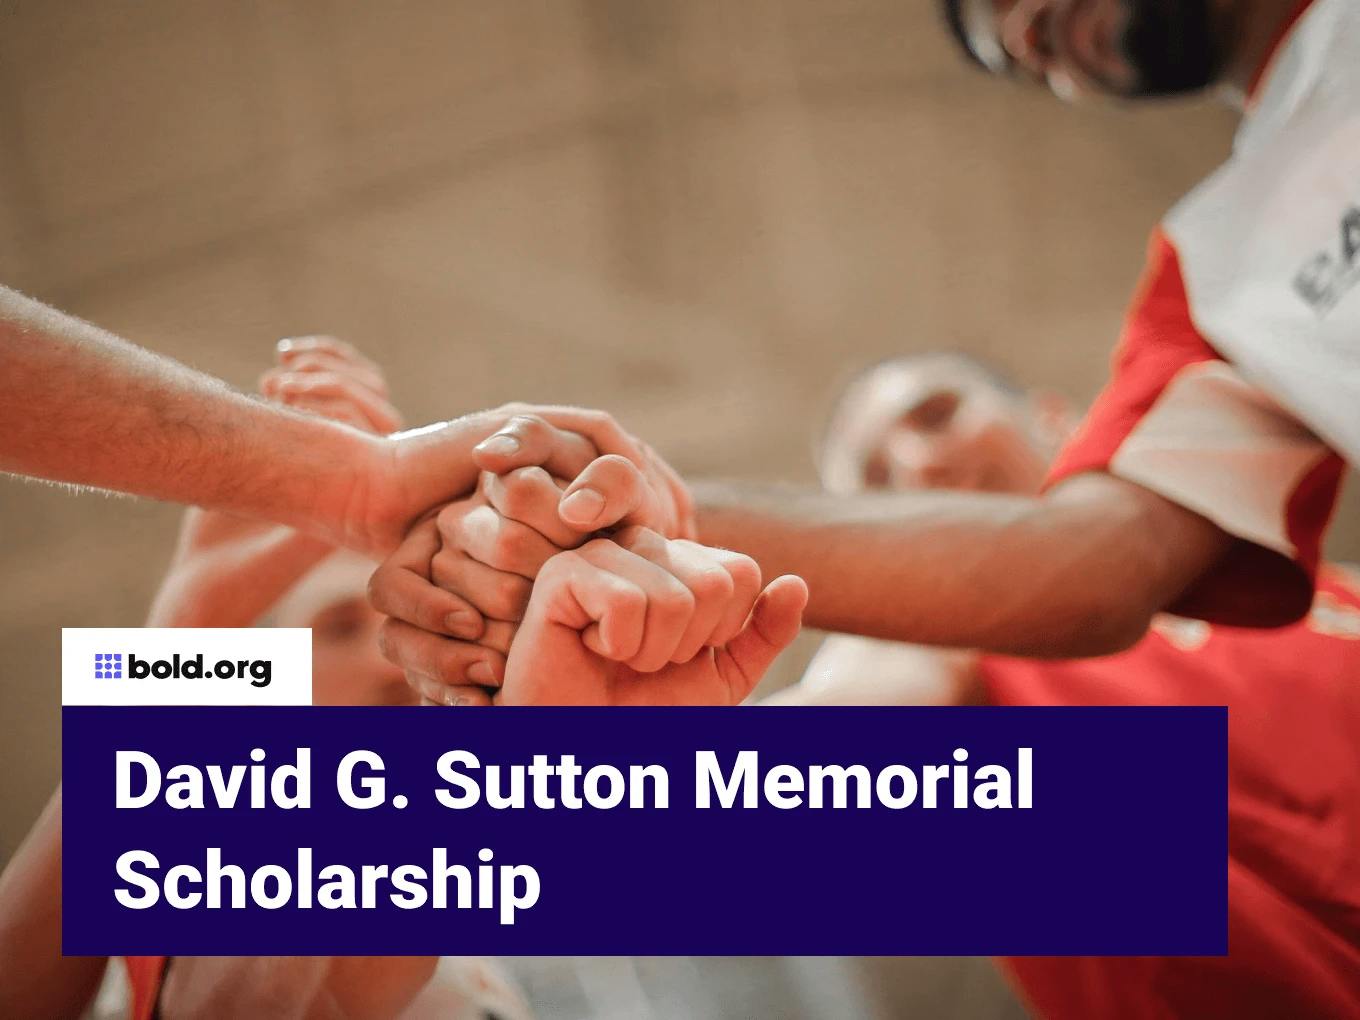 David G. Sutton Memorial Scholarship